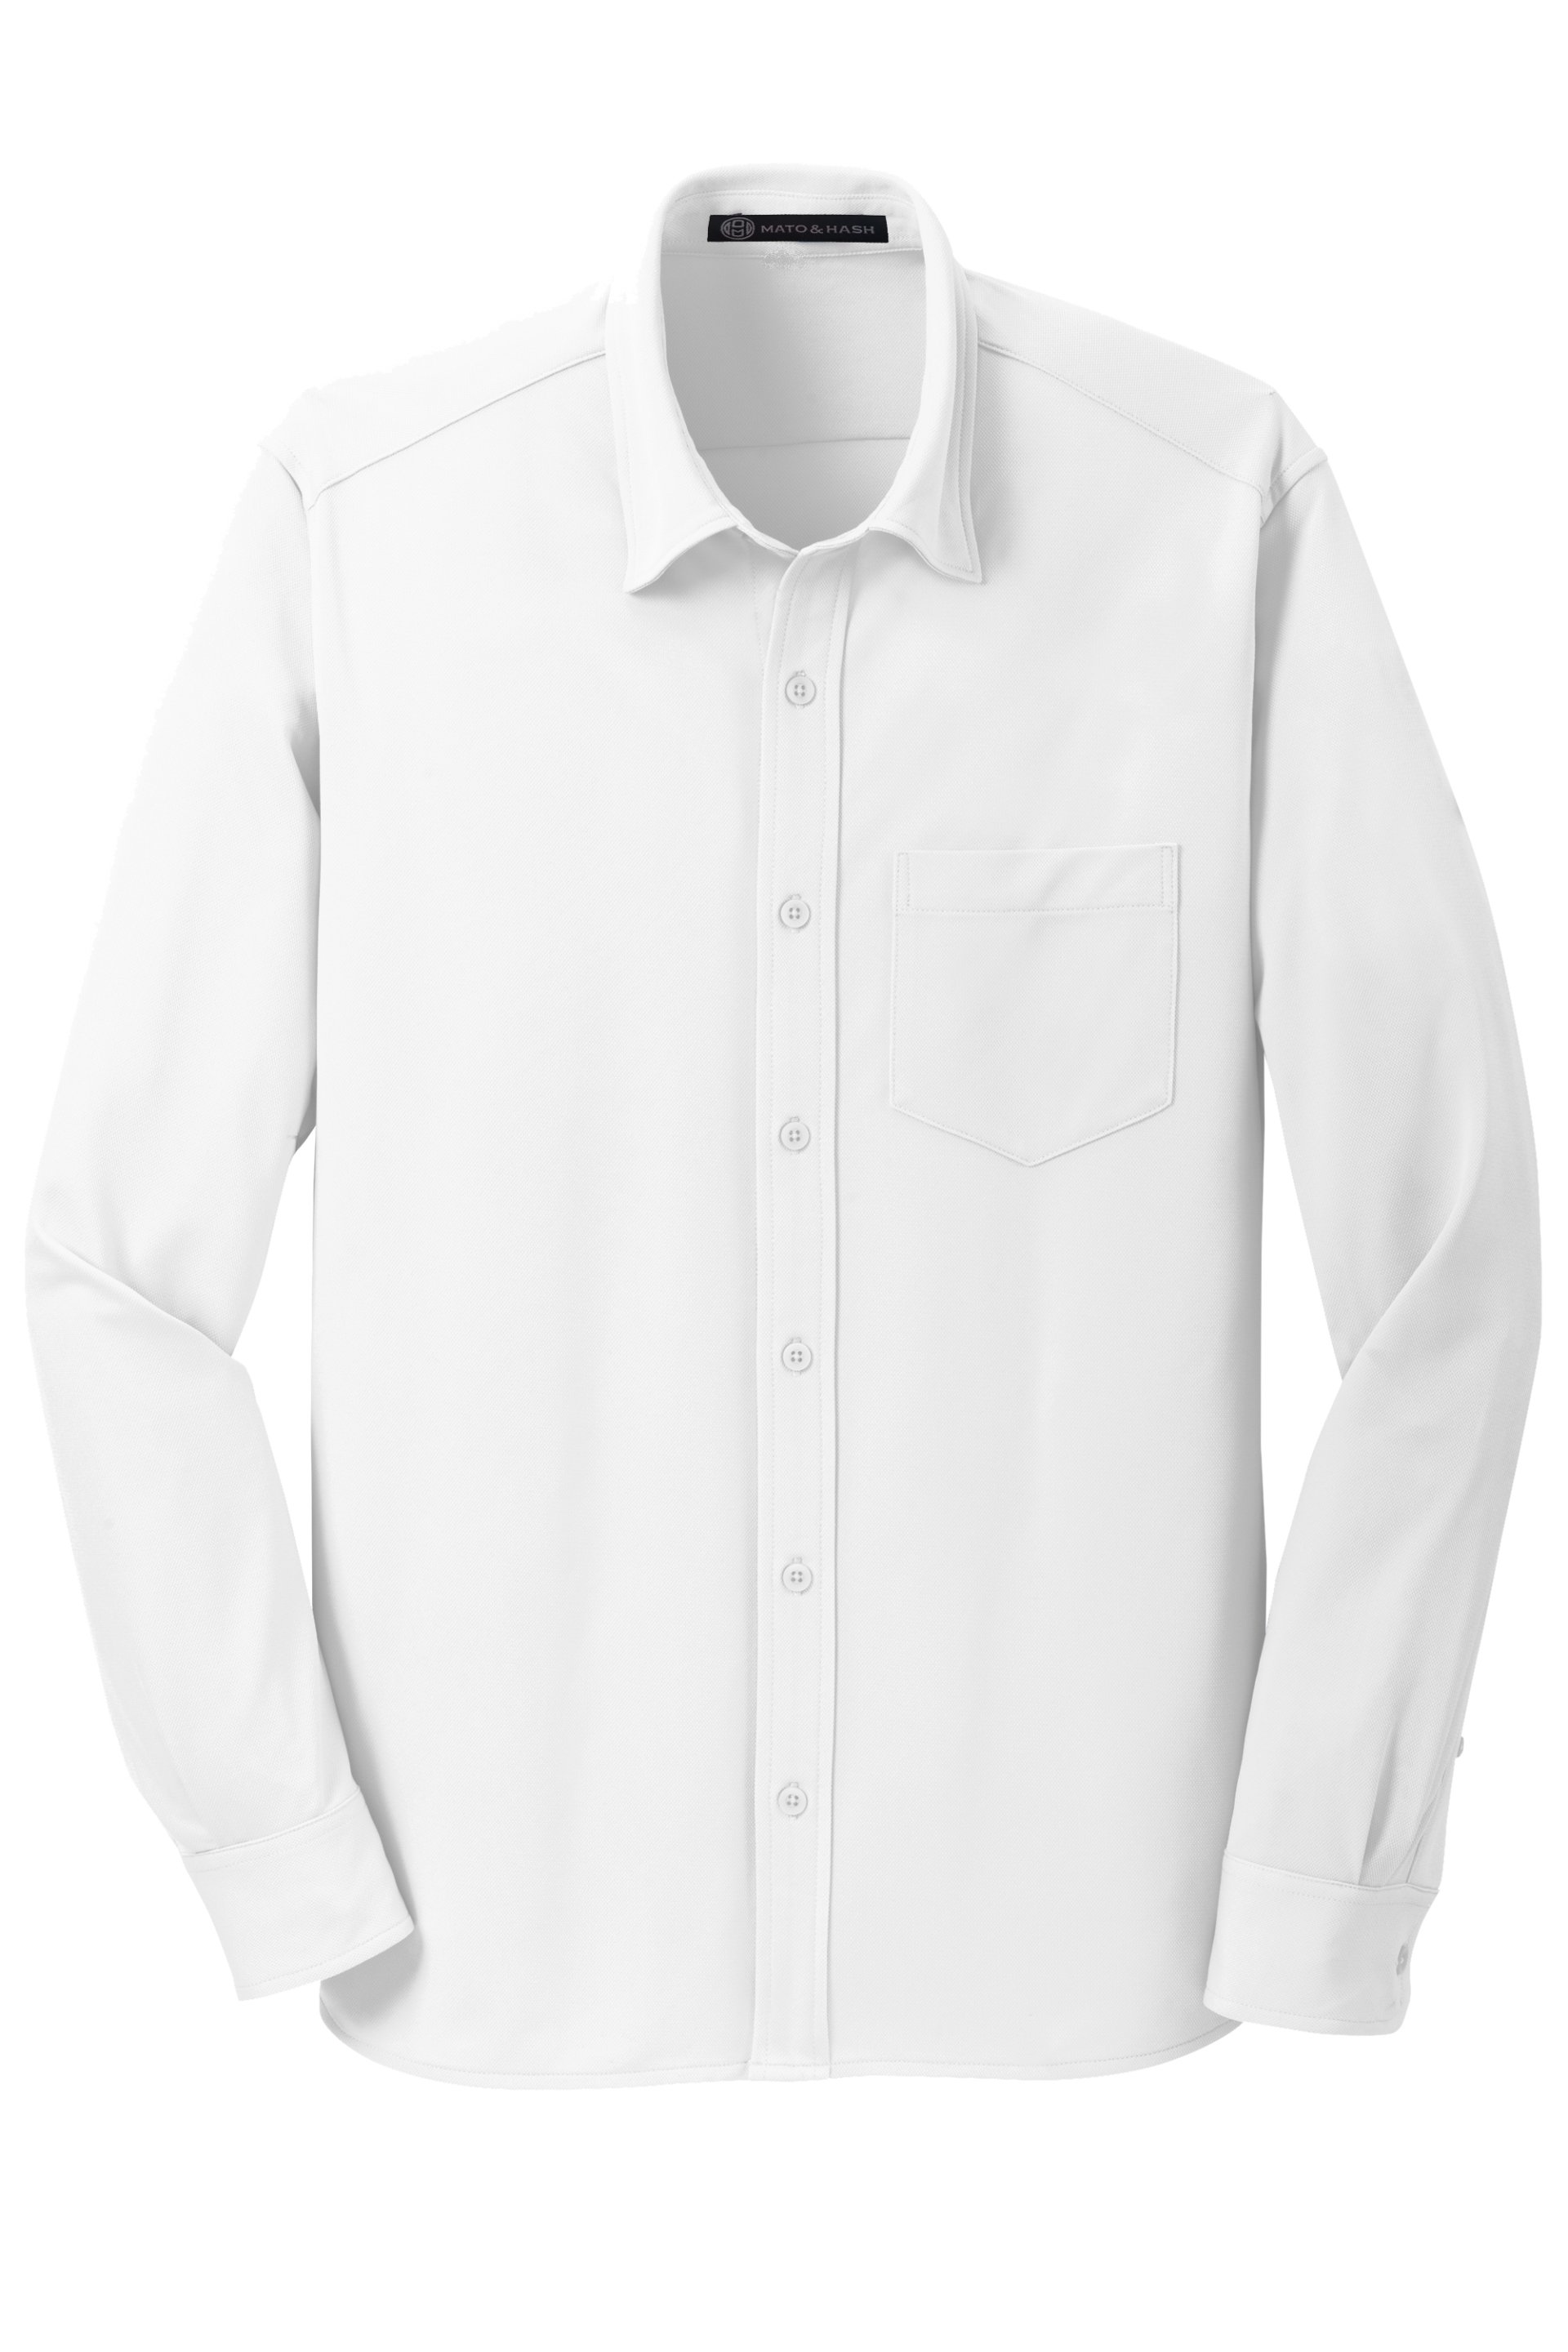 walmart mens white dress shirts